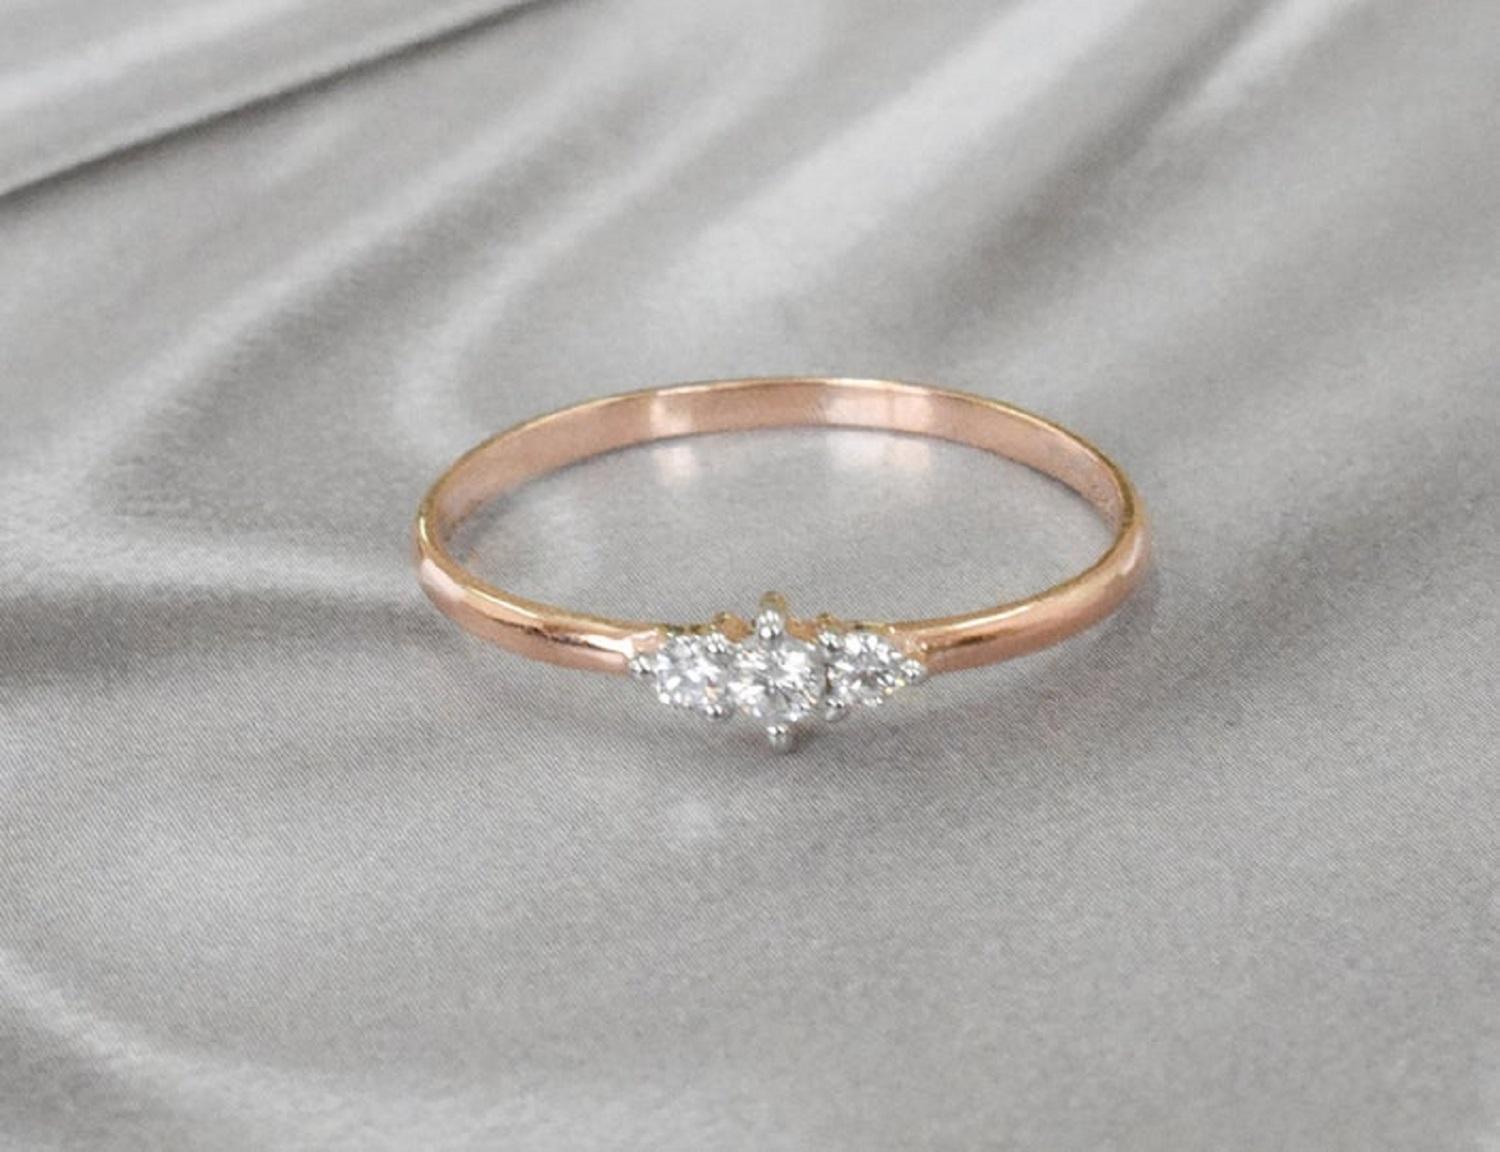 For Sale:  14k Gold Three Stone Diamond Engagement Ring Trio Diamond Ring 8